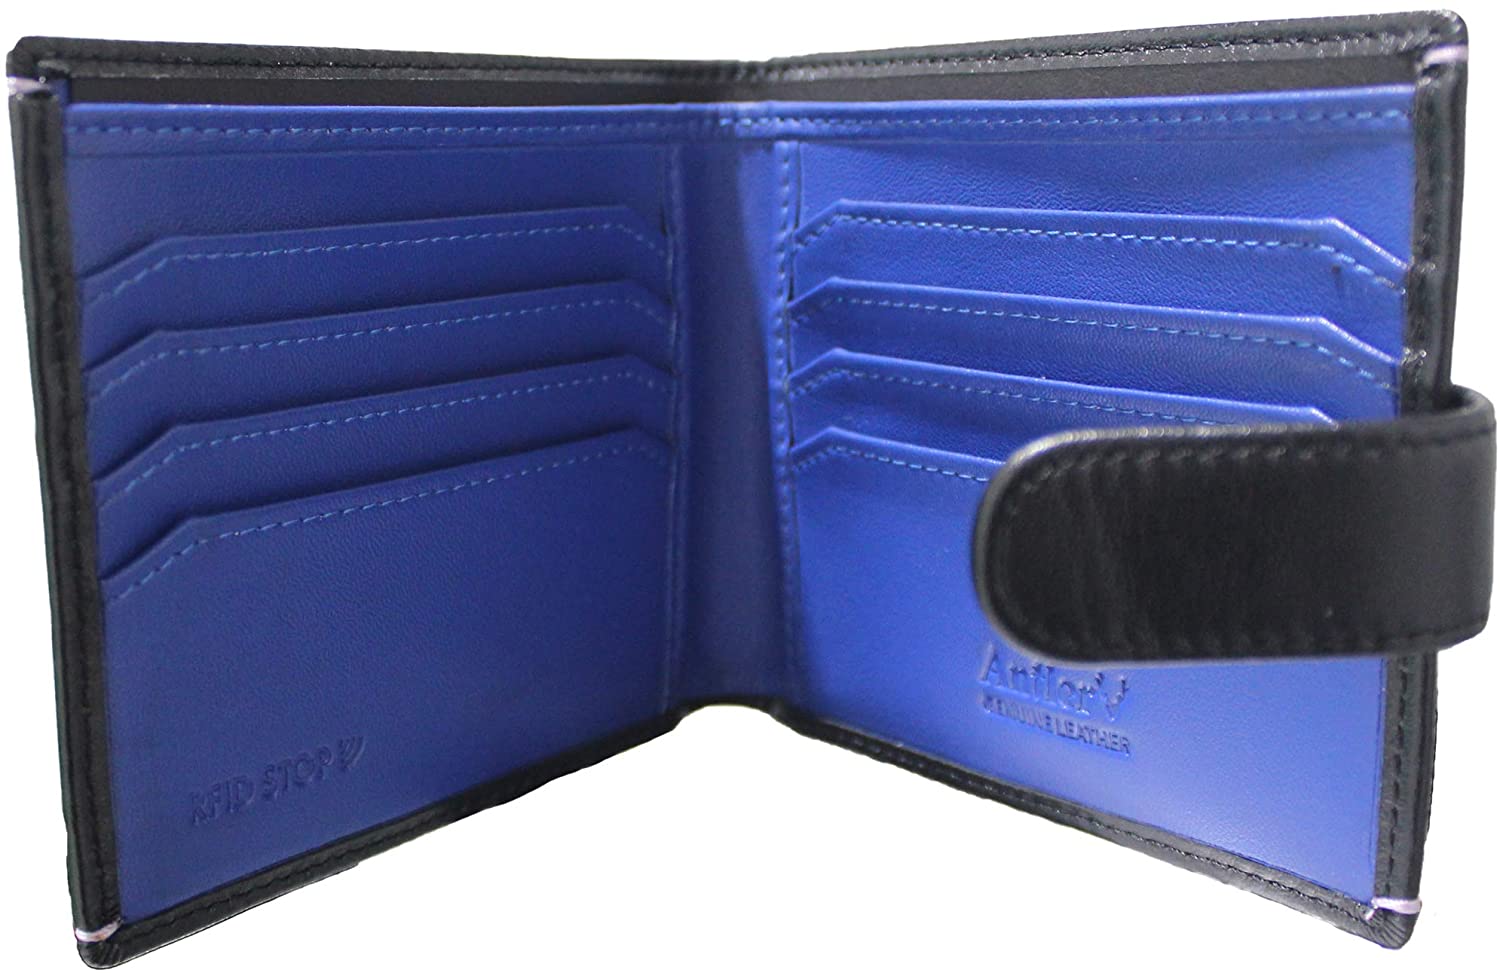 Antler UK Leather Horizontal Wallet with Divider